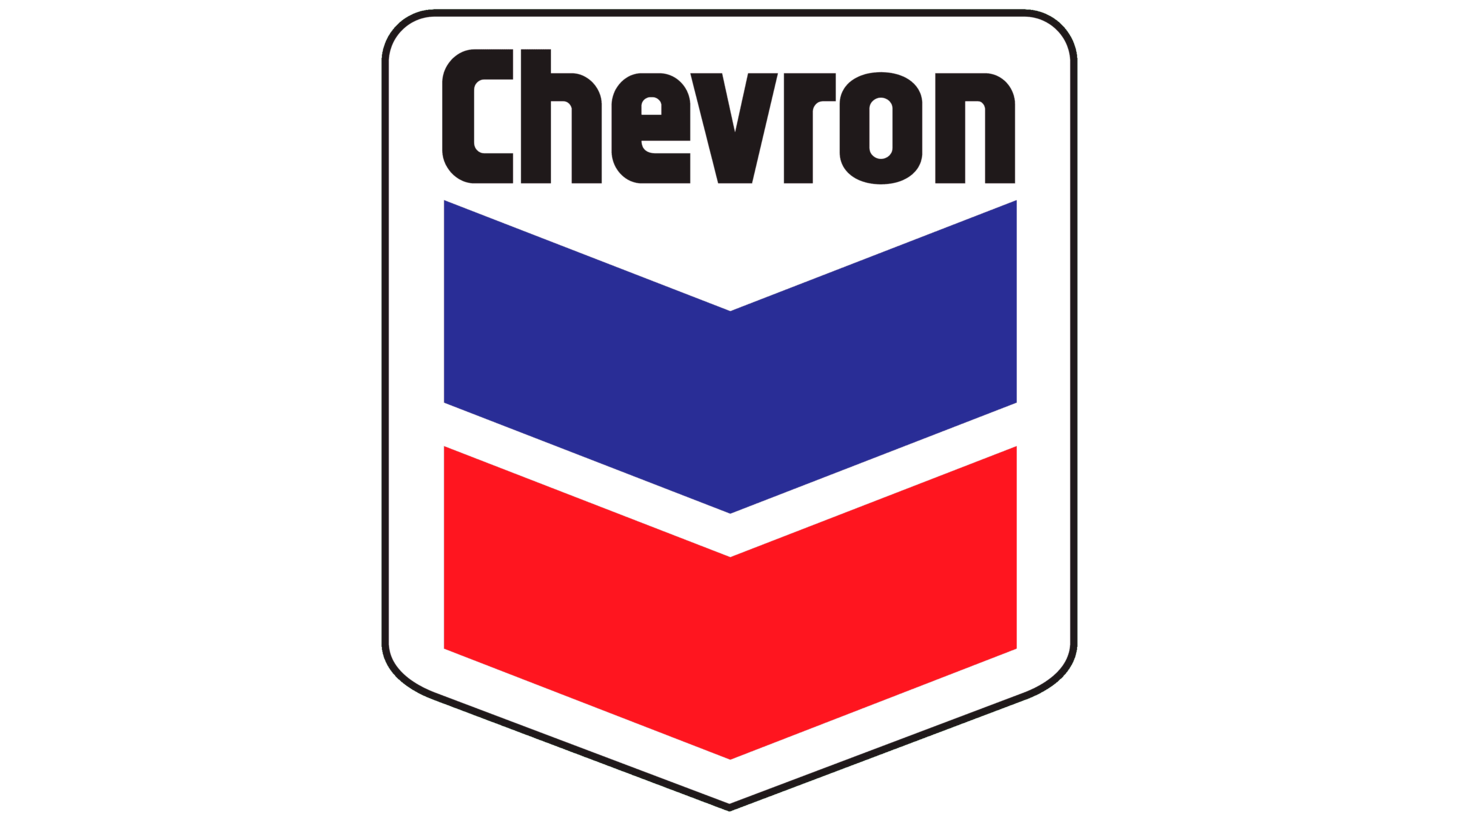 Chevron sign 1969 2006